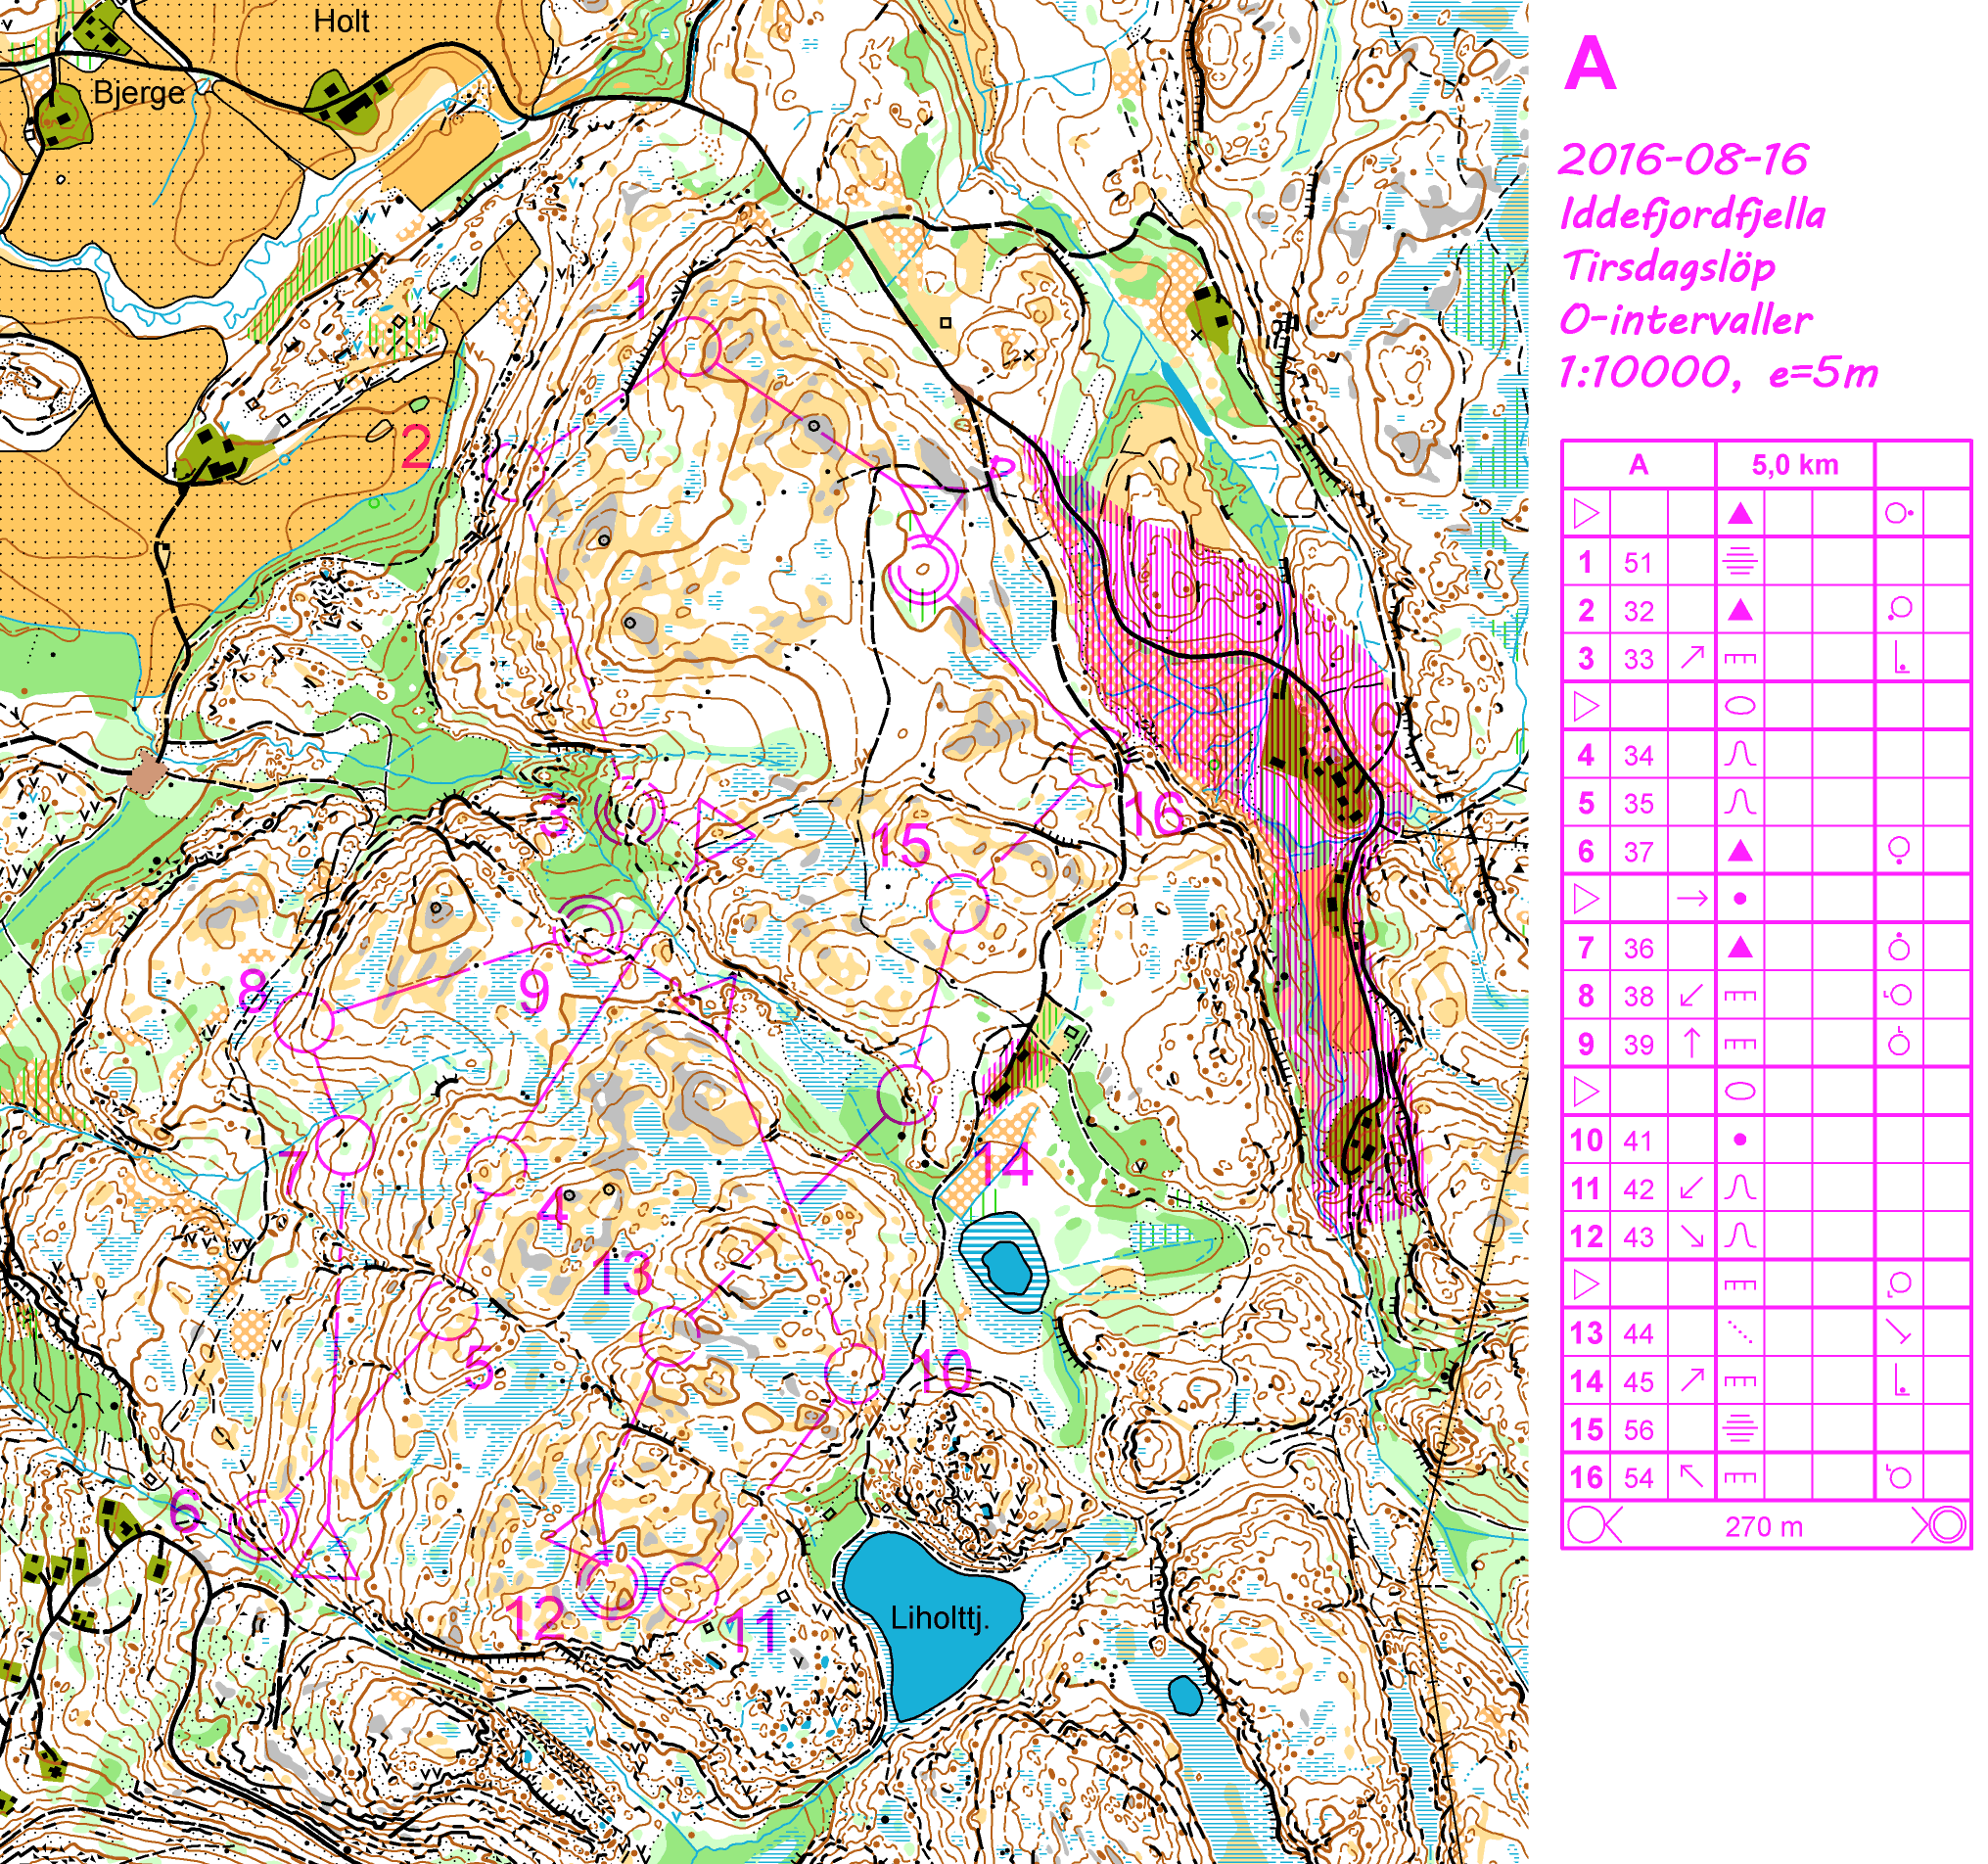 Tirsdagsløp iddefjordfjella (15.08.2016)